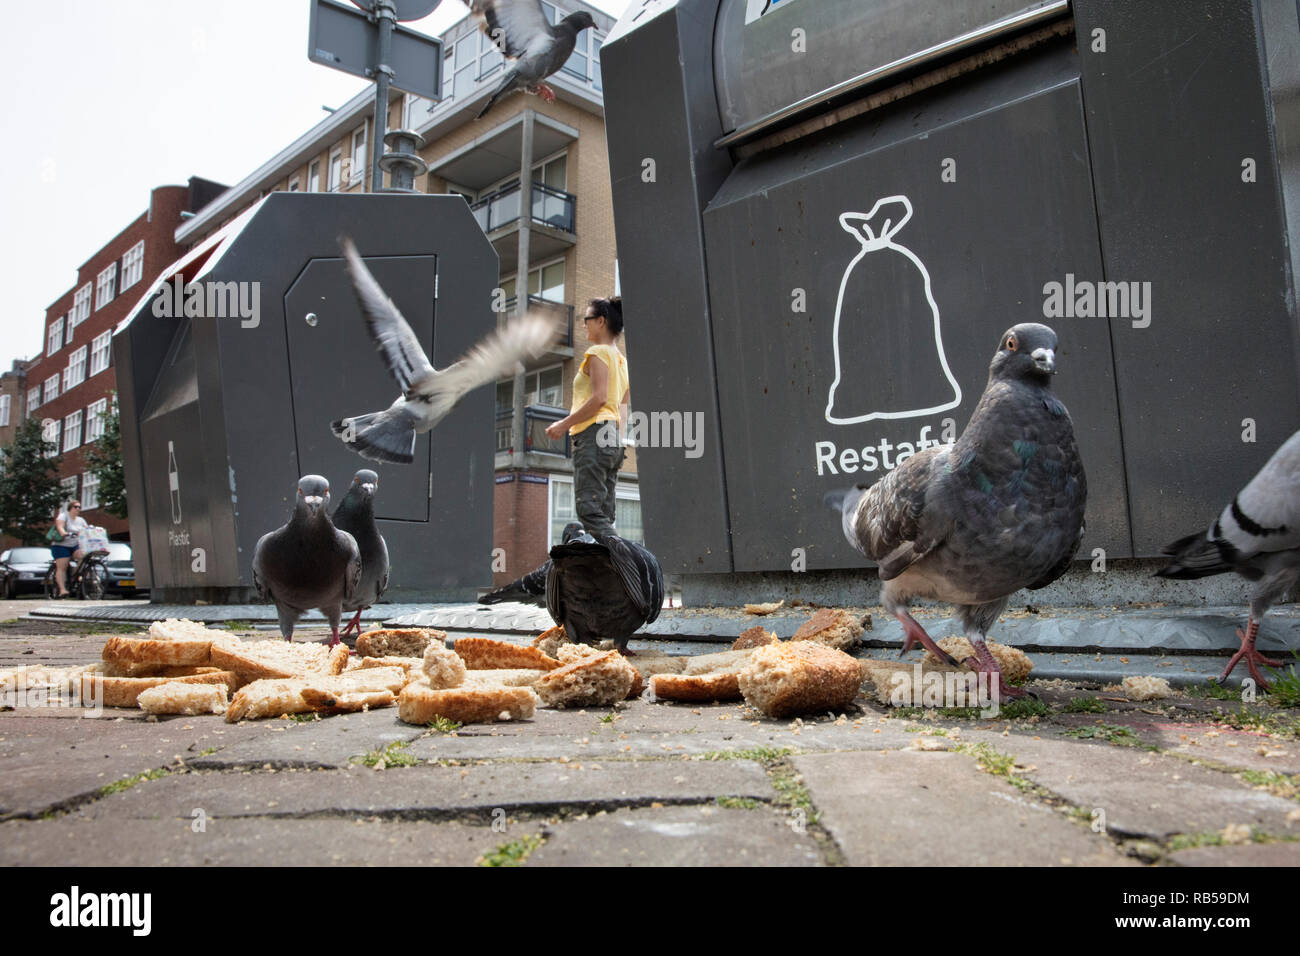 The Netherlands, Amsterdam. Pigeons feeding on bread near garbage bin. Stock Photo